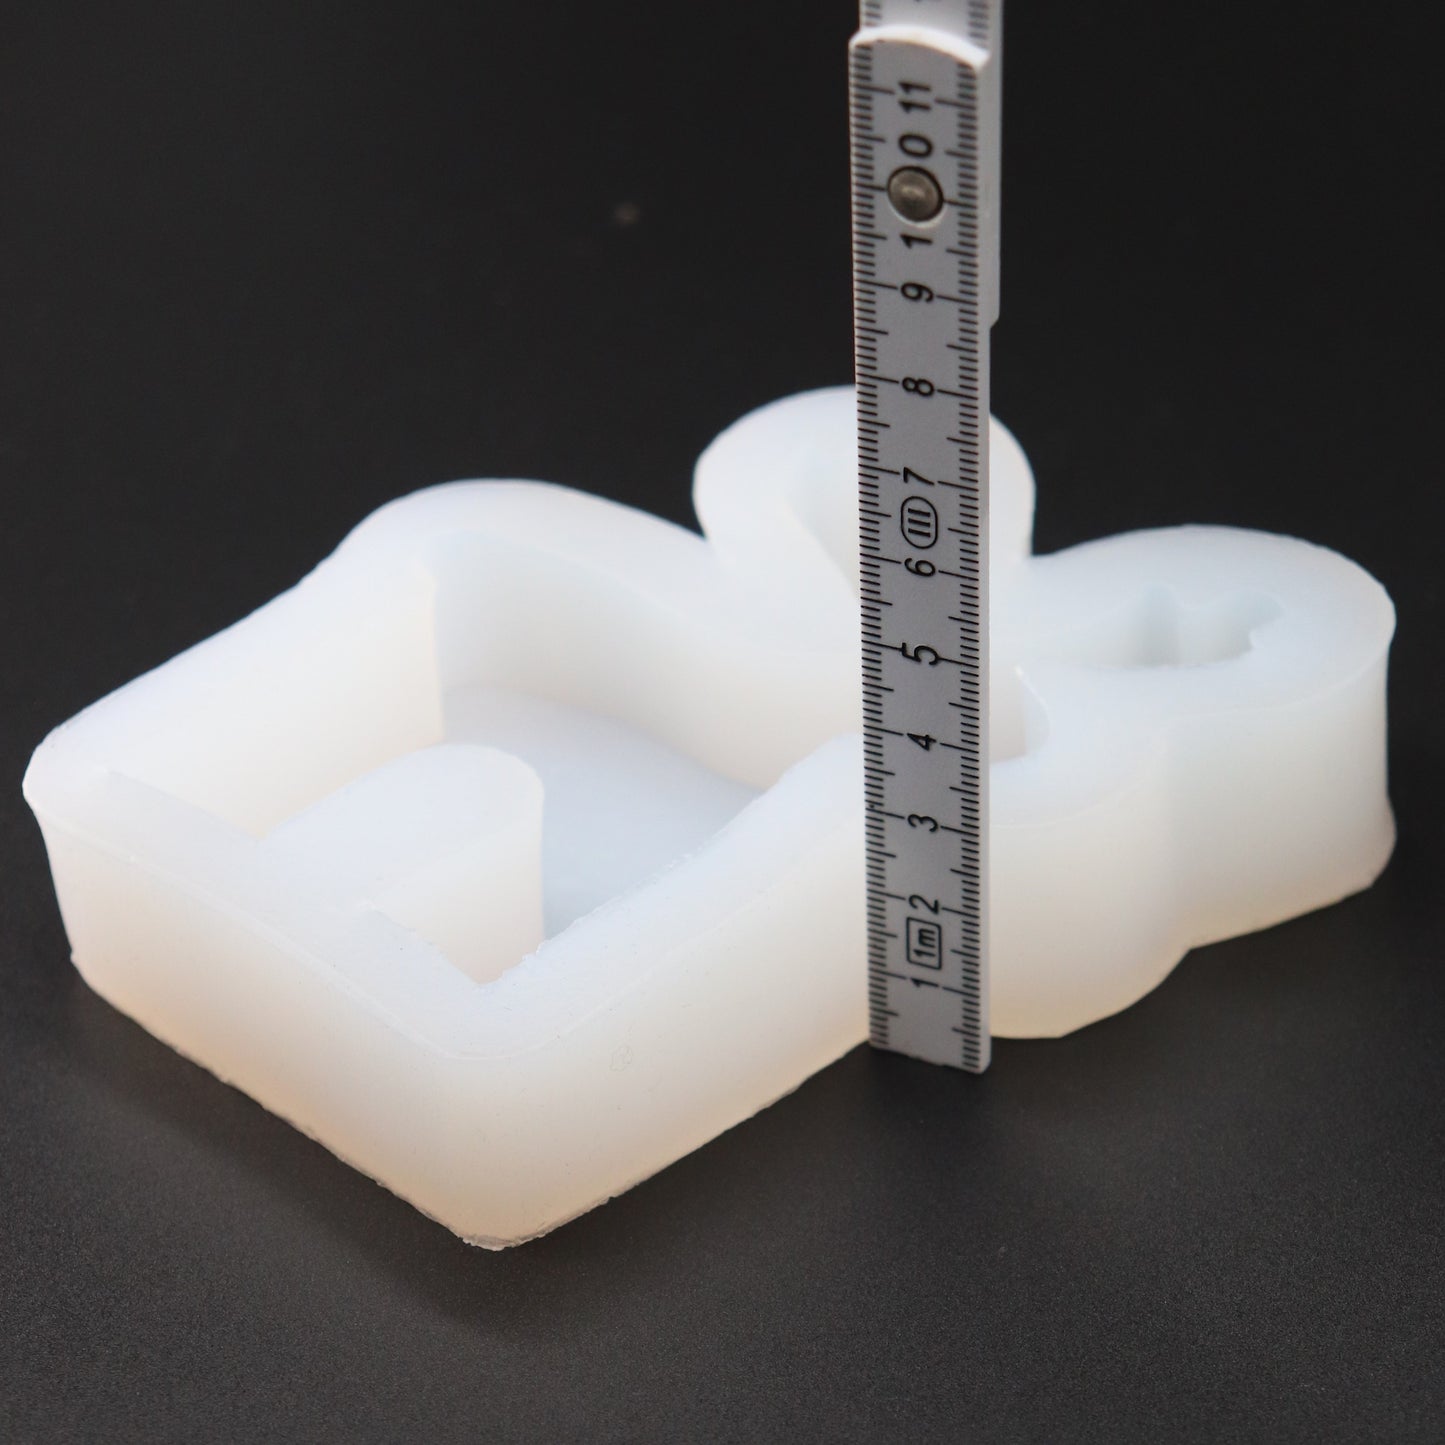 Silikonform Rentier Gießform für Raysin Wachs oder Epoxidharz ca. 10 cm